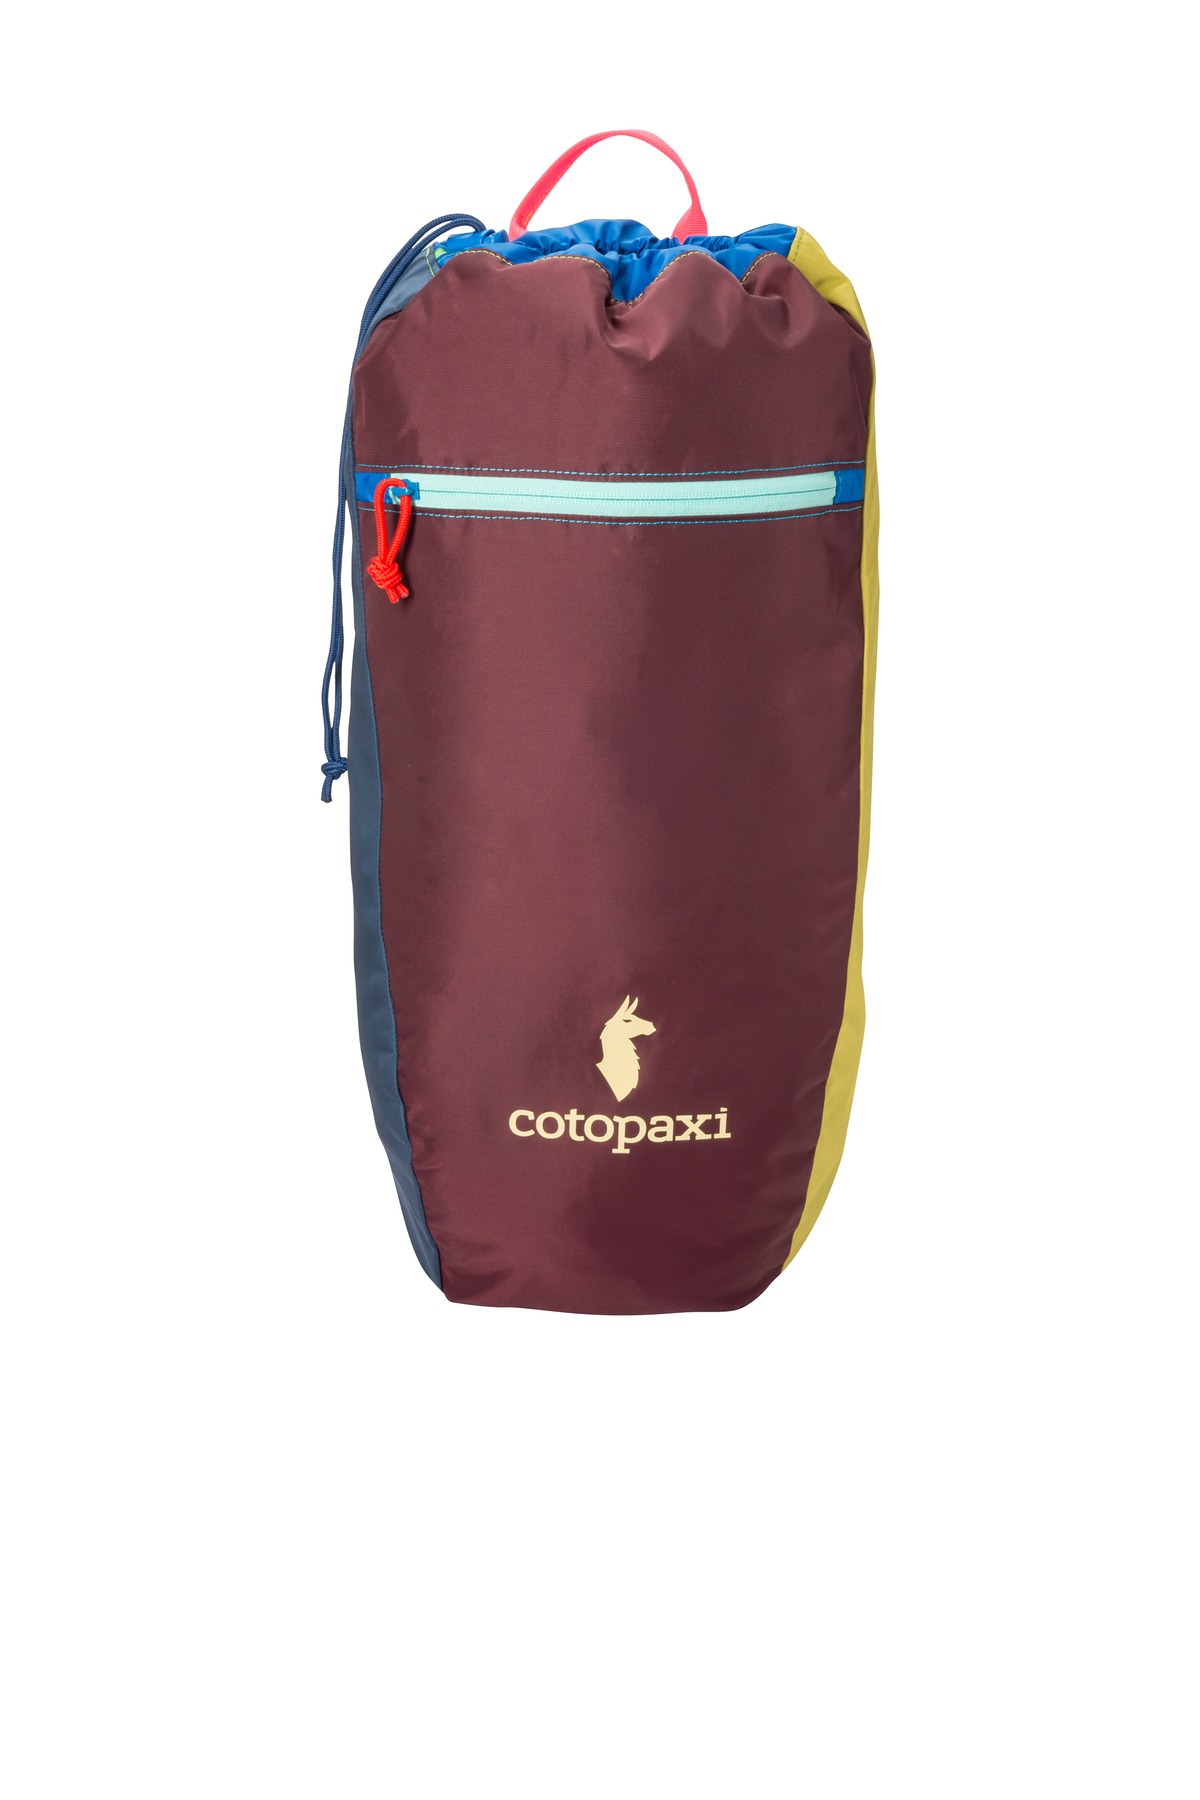 Cotopaxi Luzon 18L Backpack-